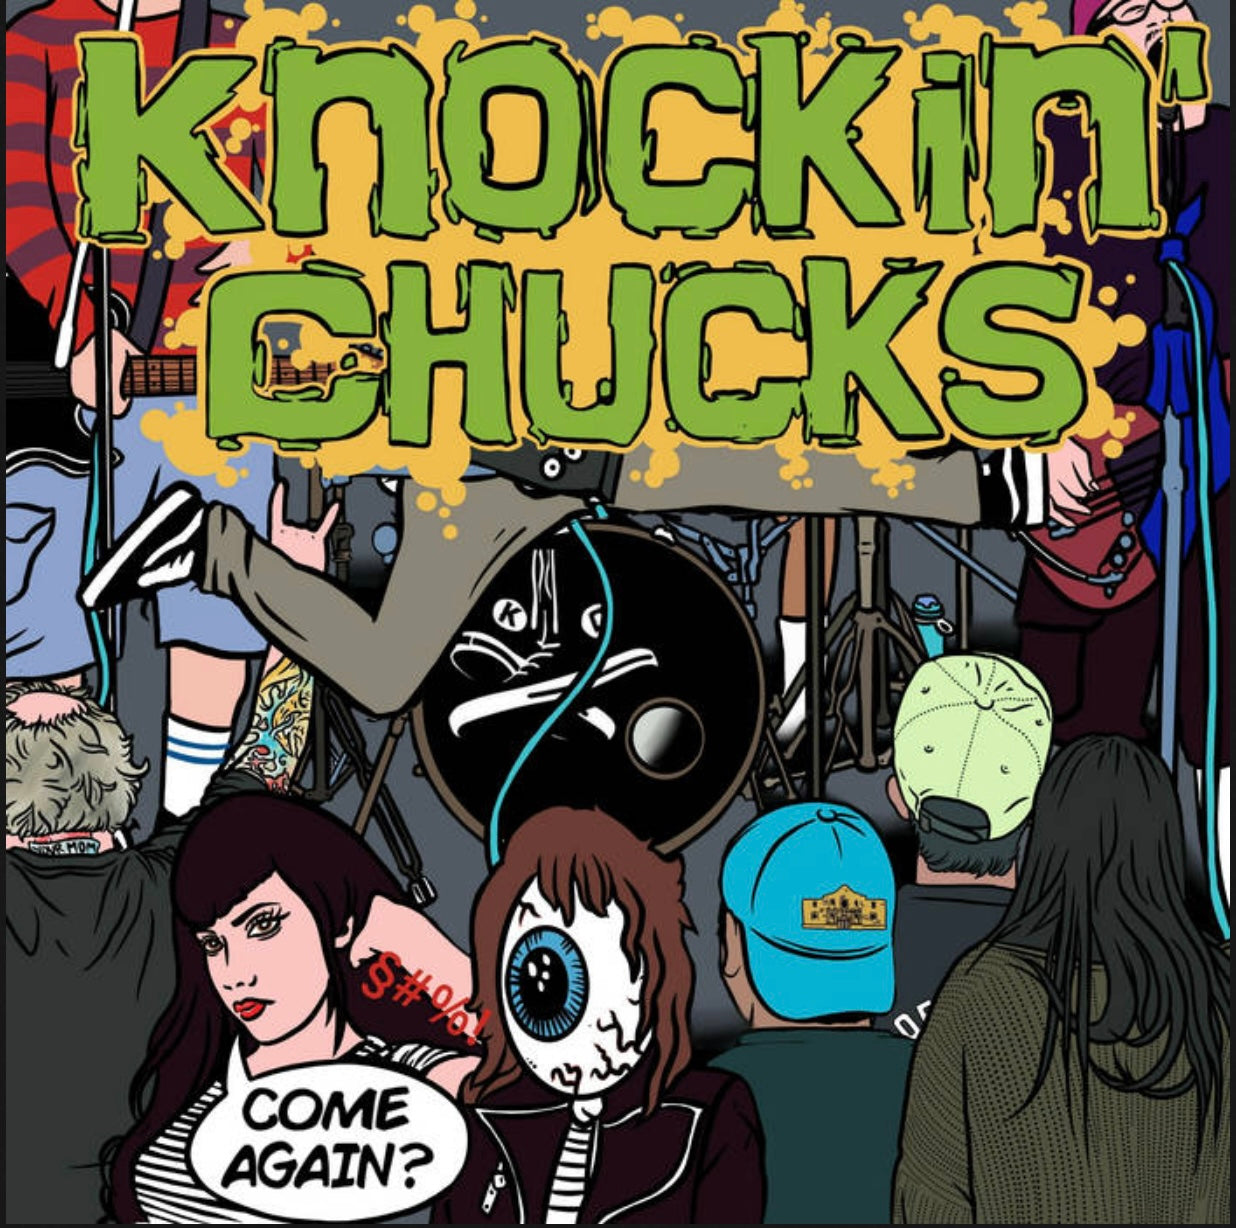 OMR-031 Knockin’ Chucks “Come Again?!” CD